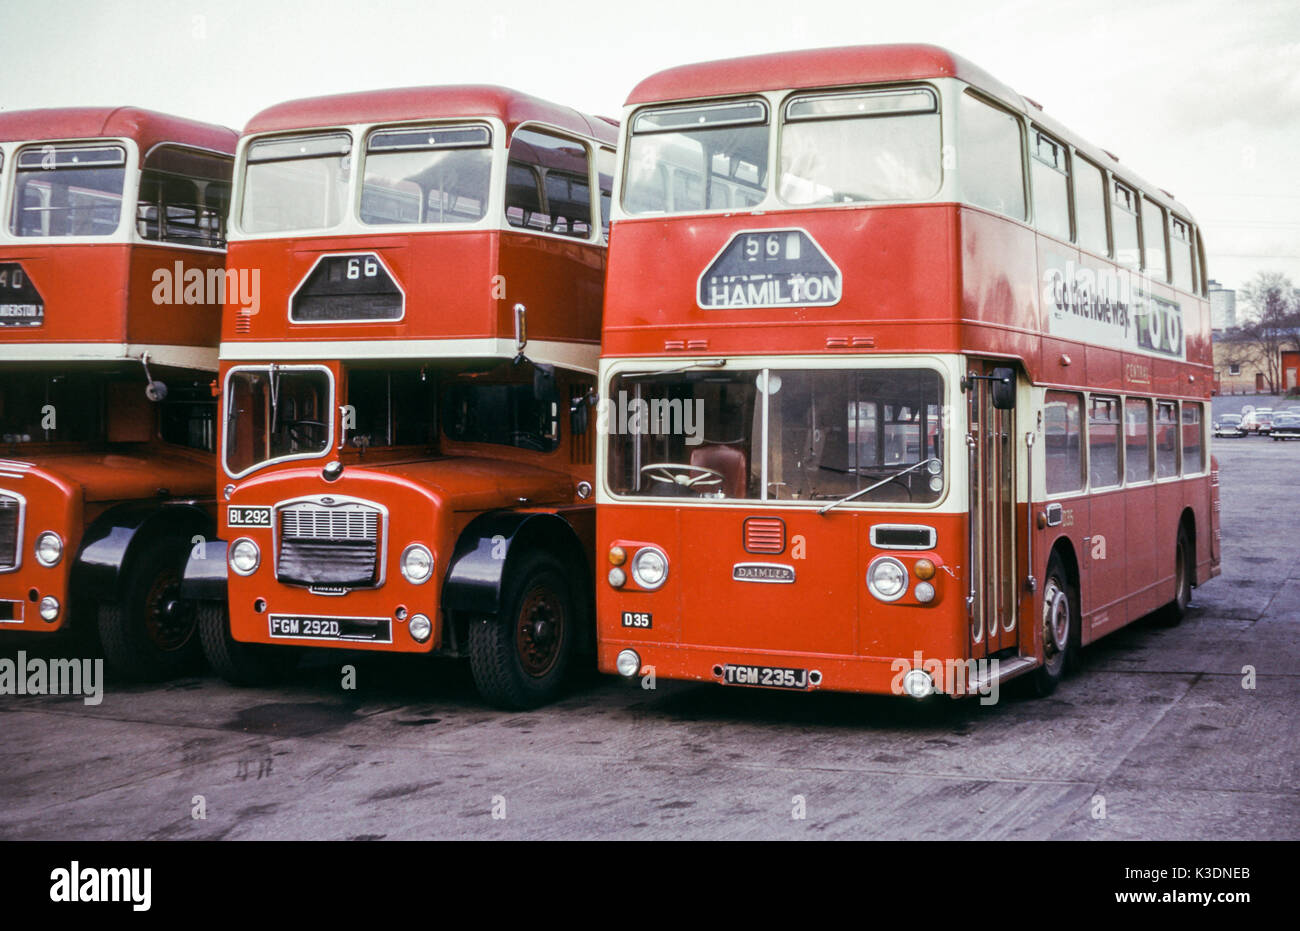 Escocia, Reino Unido - 1973: Vintage imagen de autobuses operan en 1973. SMT Central flota Fleetlines Daimler no. D35 (registro TGM 235J) y Bristol Lodekka FLF flota no. BL 292 (registro MGF 292D). Foto de stock